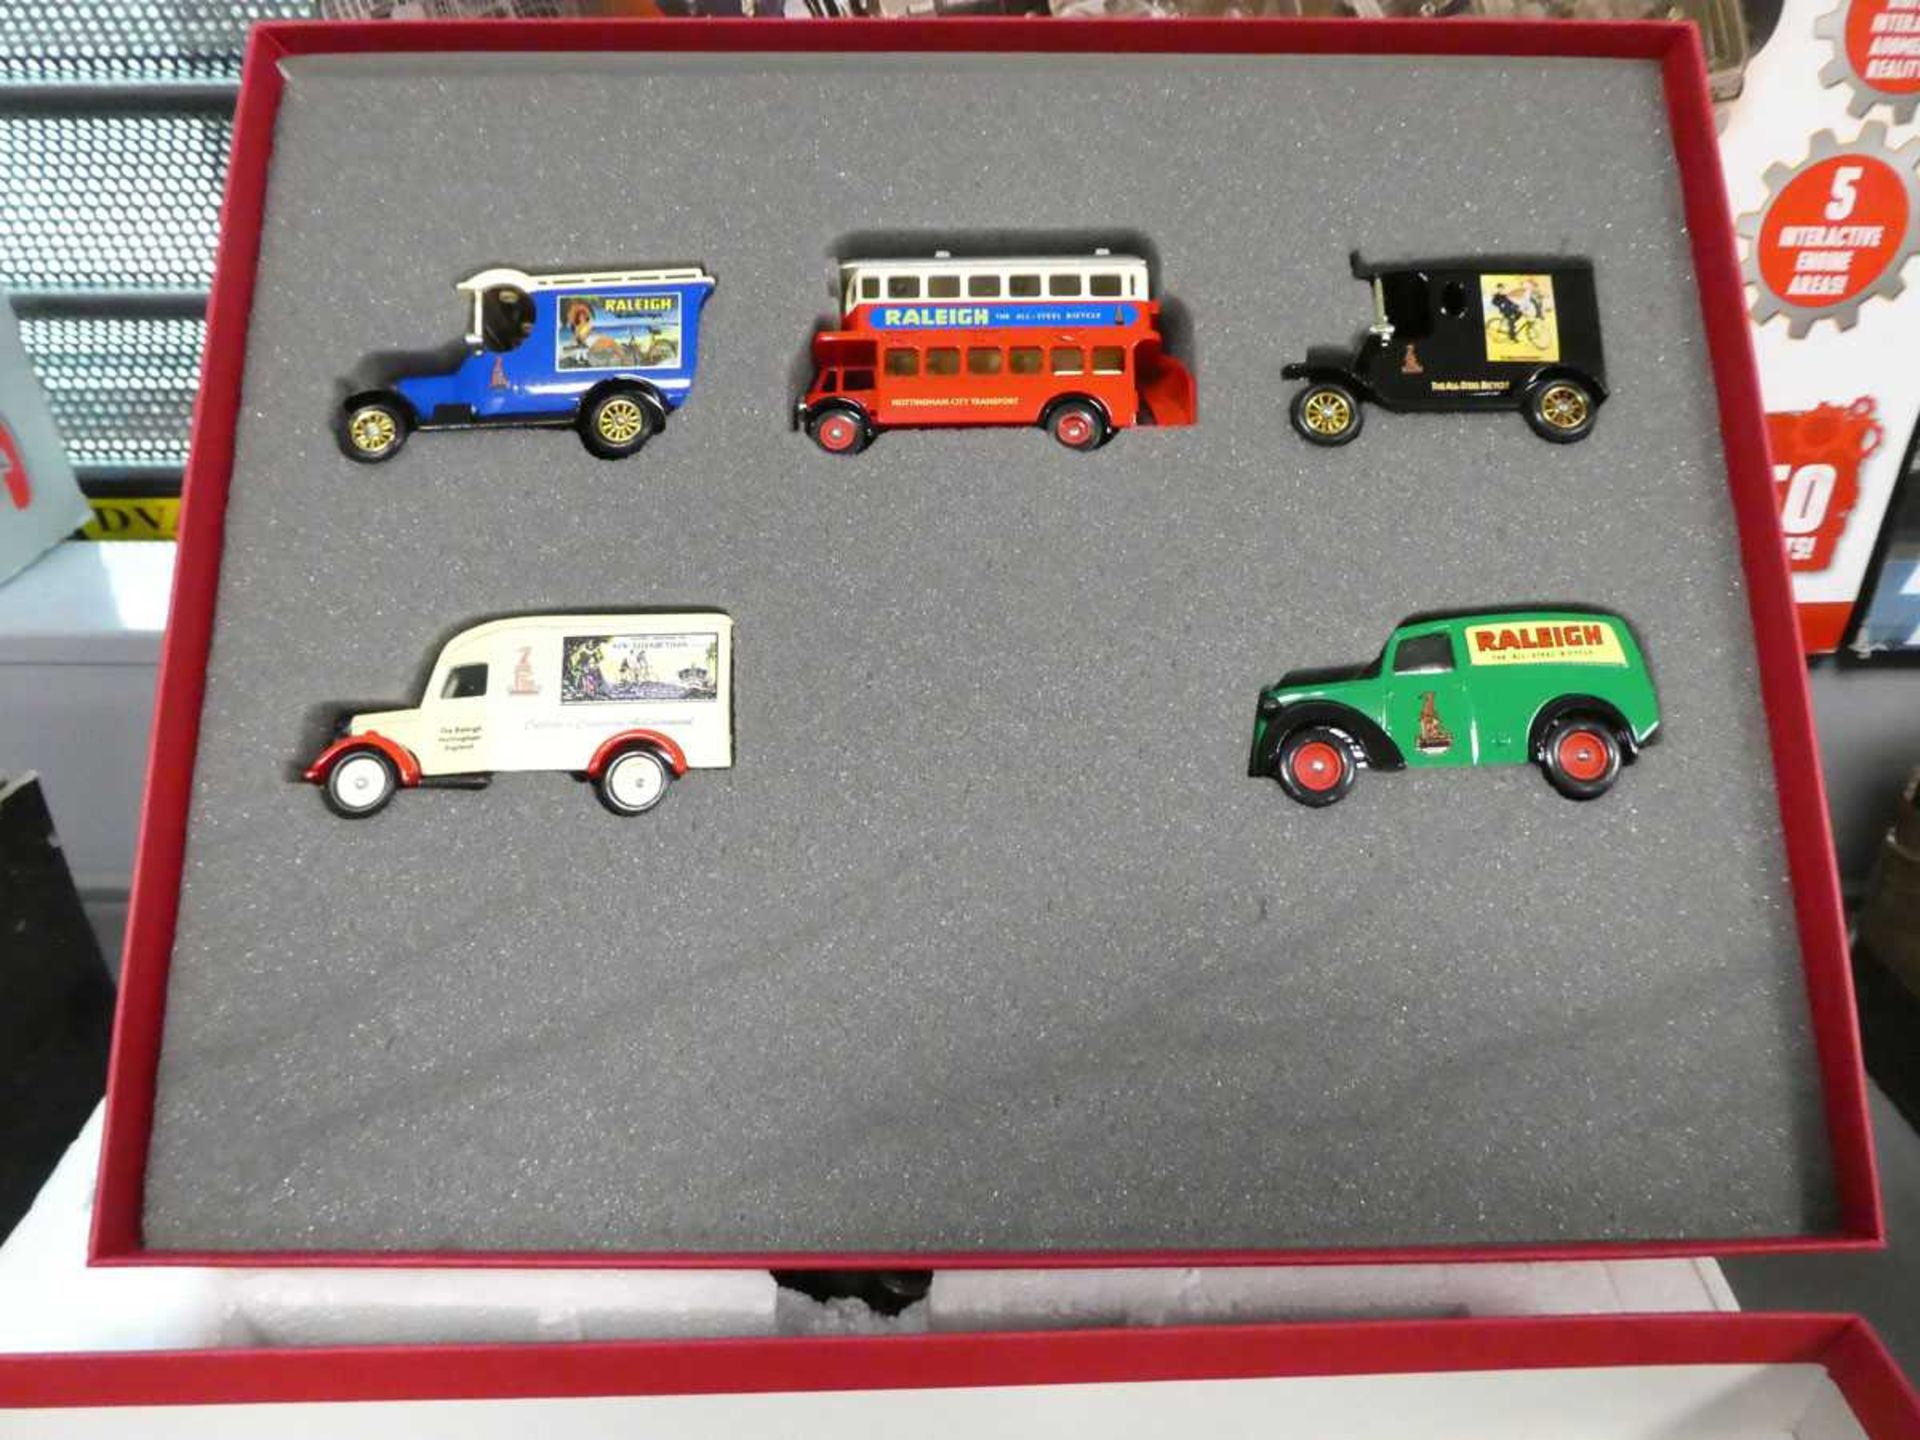 Ltd Edn. Raleigh vehicle box set